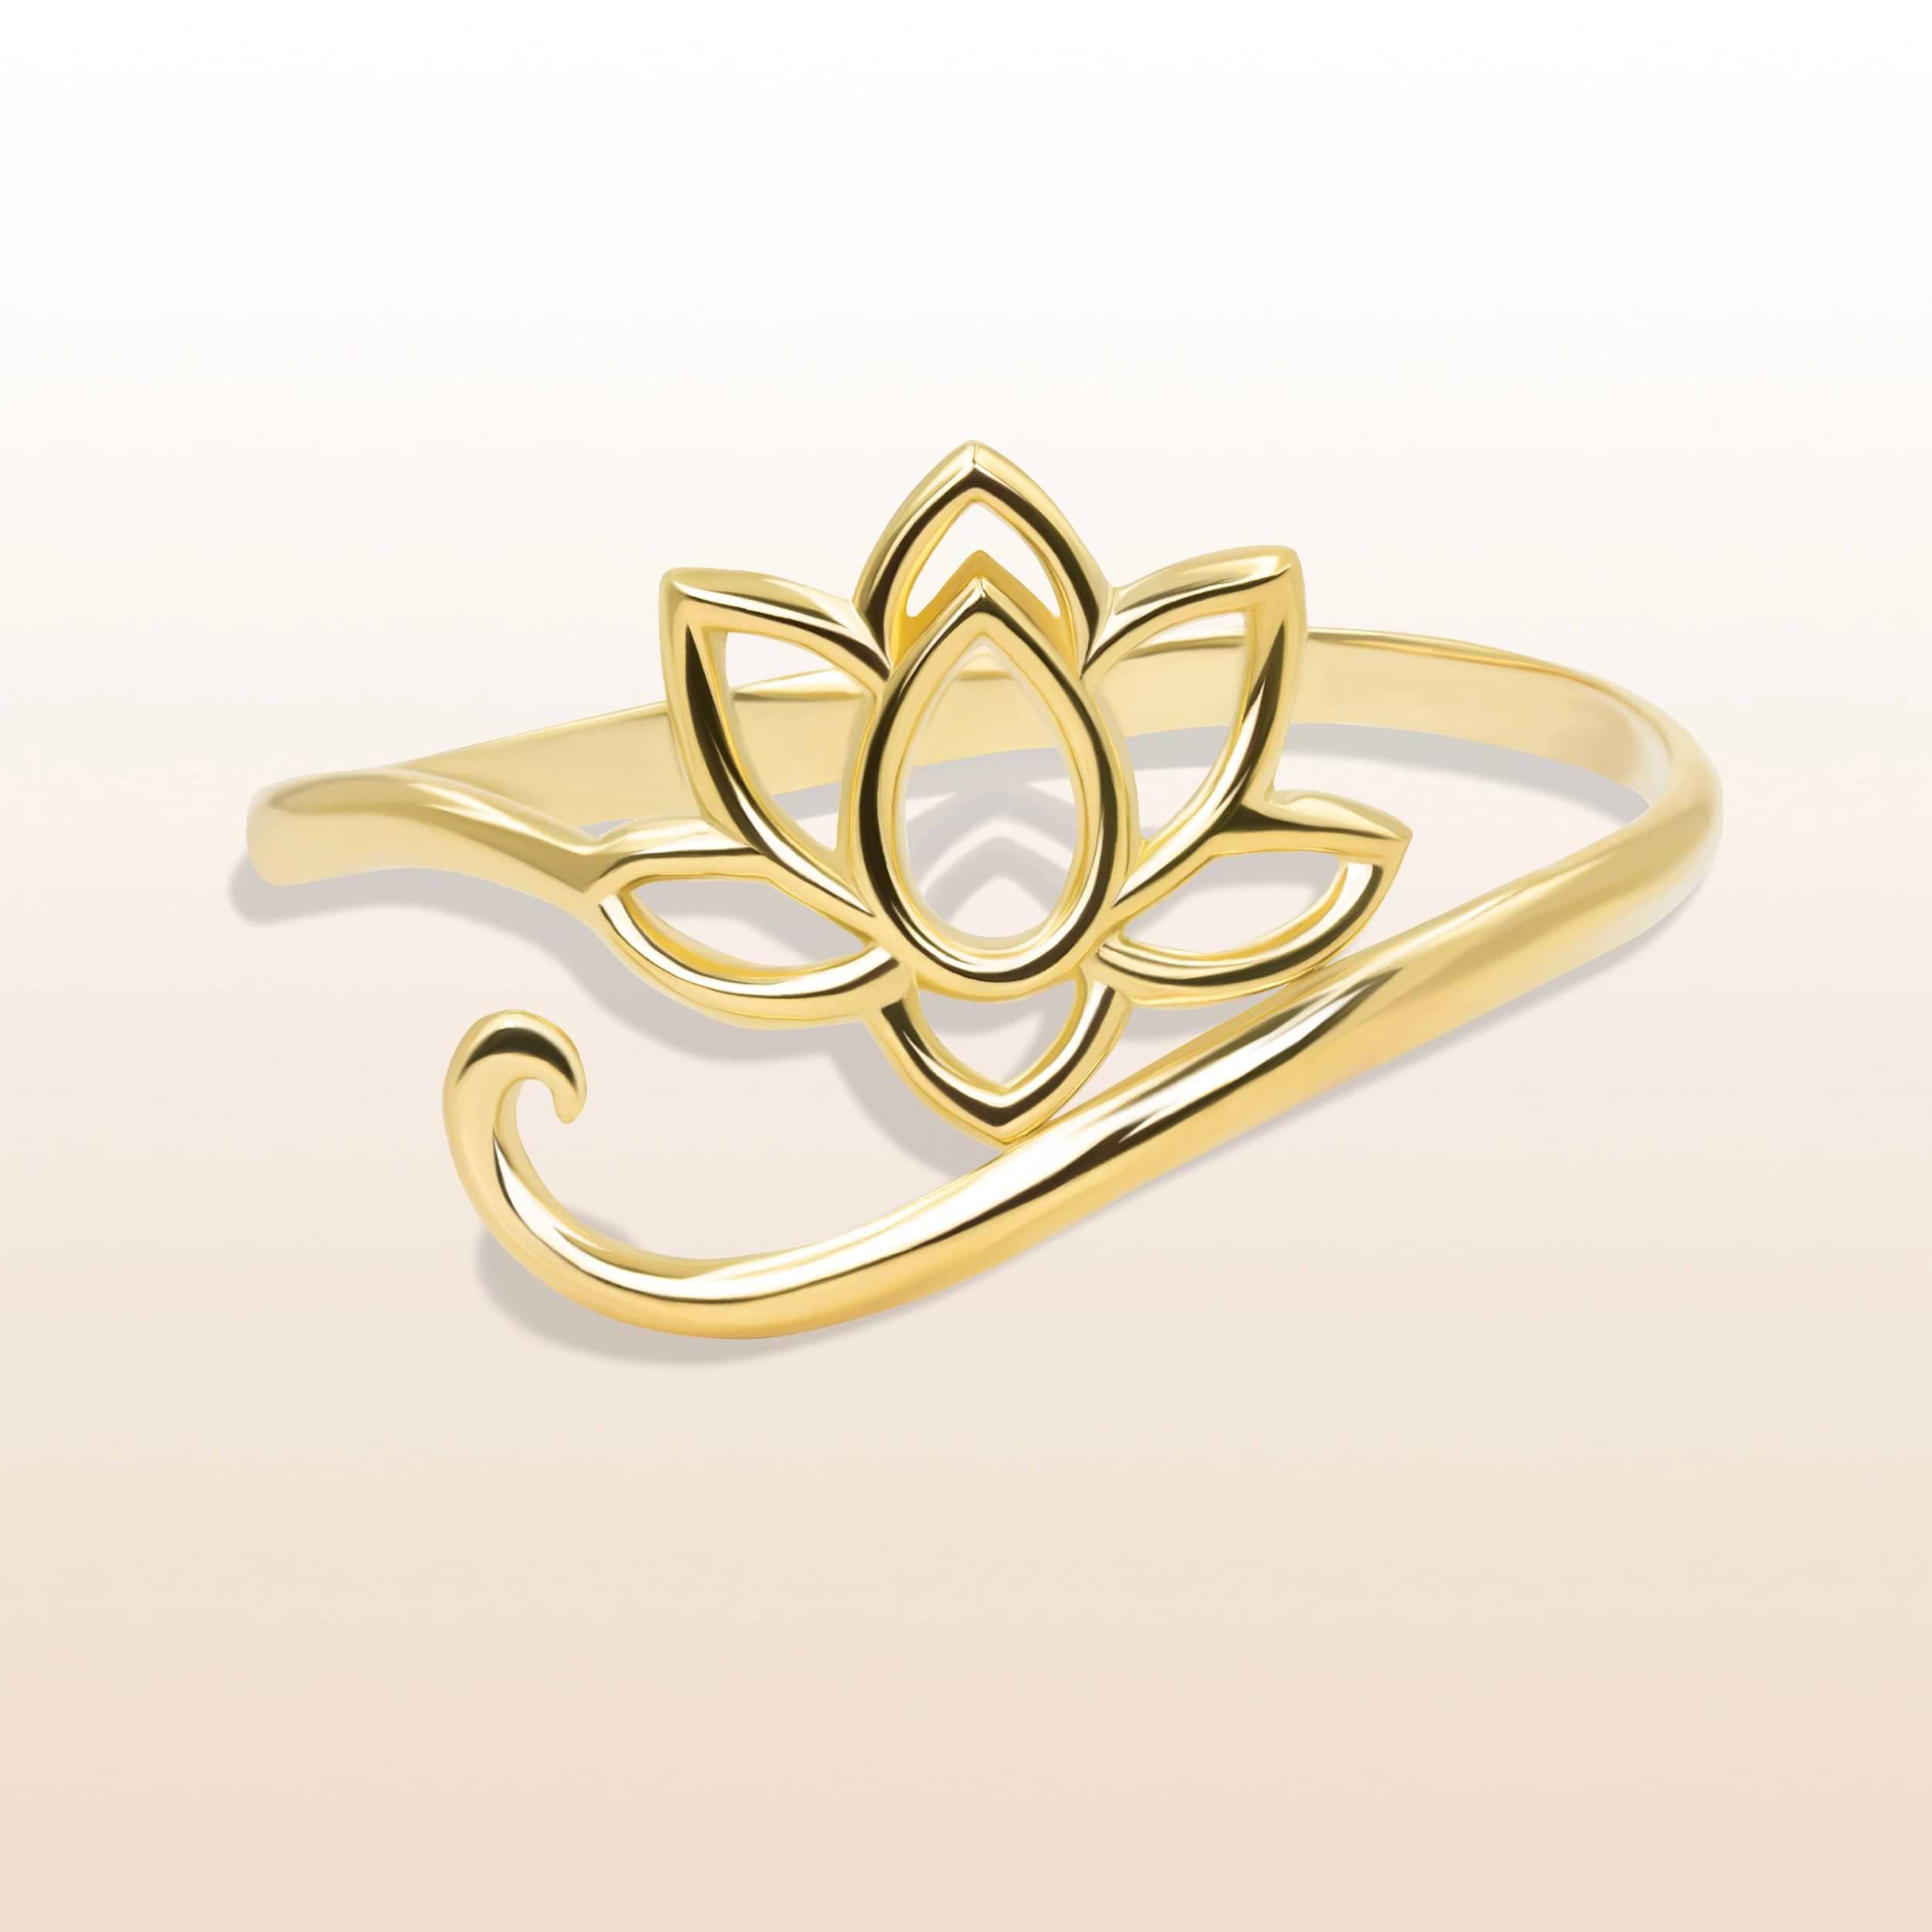 Spiritual Enlightenment - Lotus Charm Arm Cuff